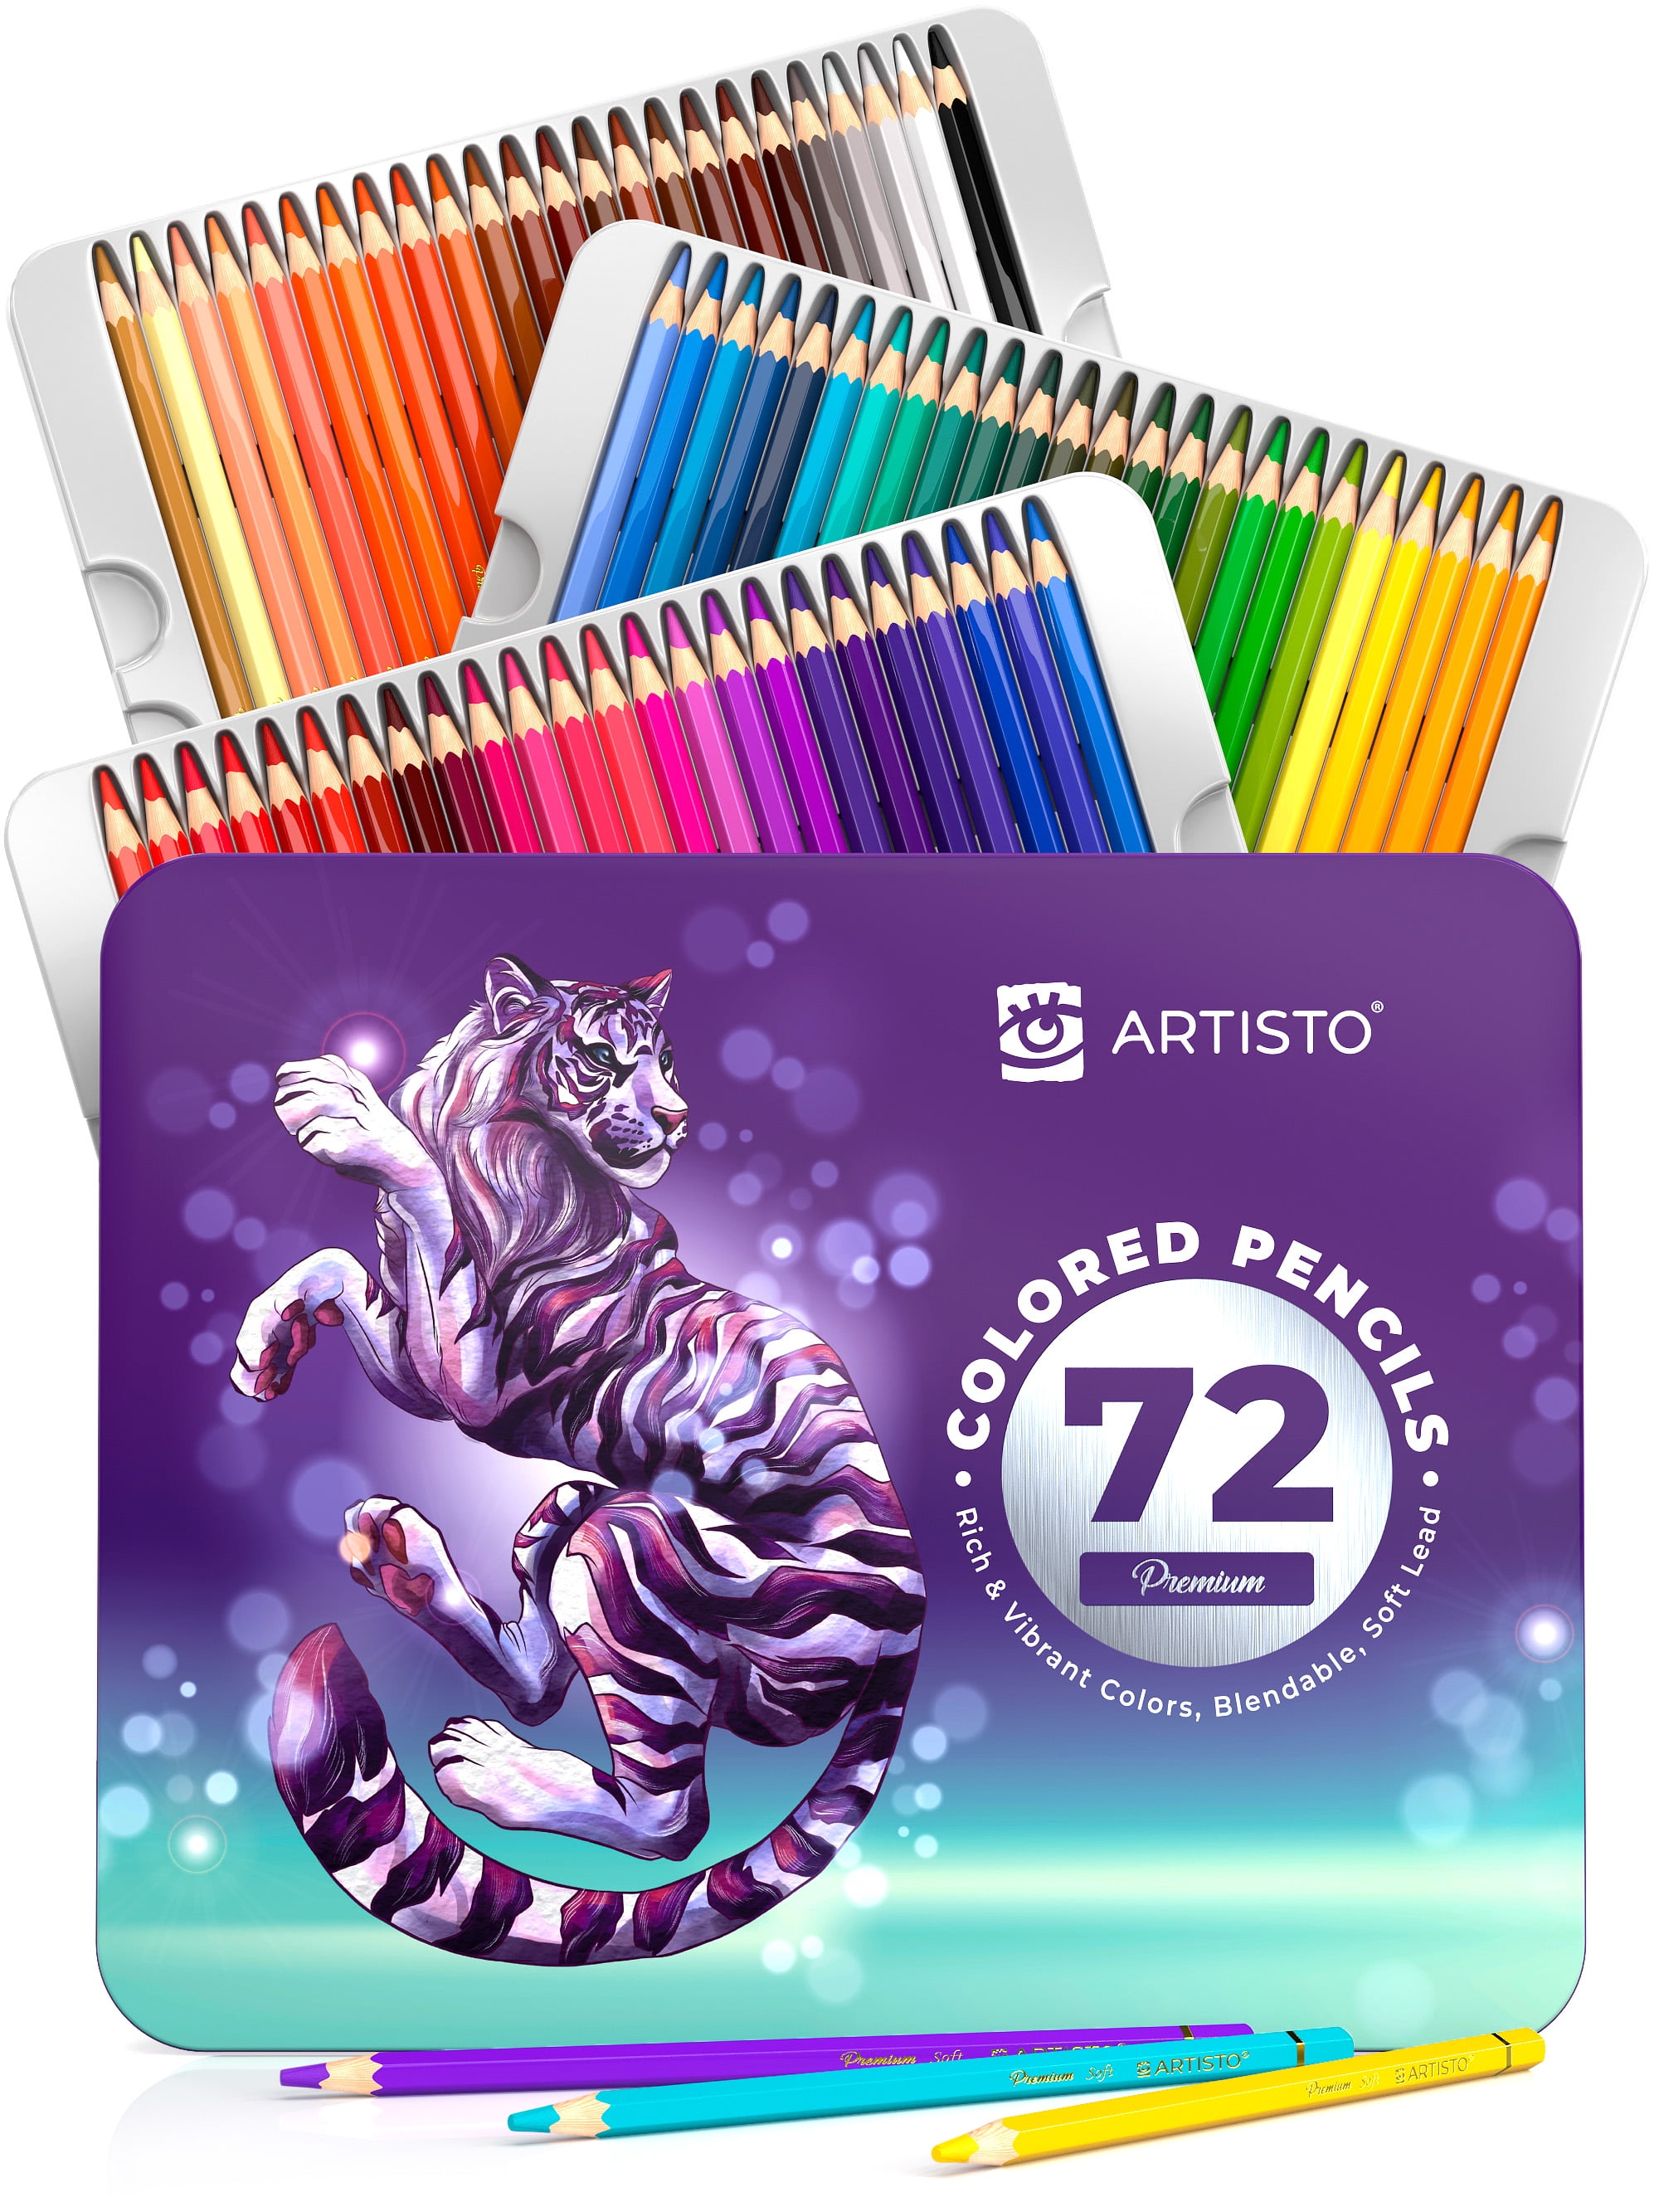 ARTISTO Premium Colored Pencils  Set of 72, Quality 3.8mm Soft